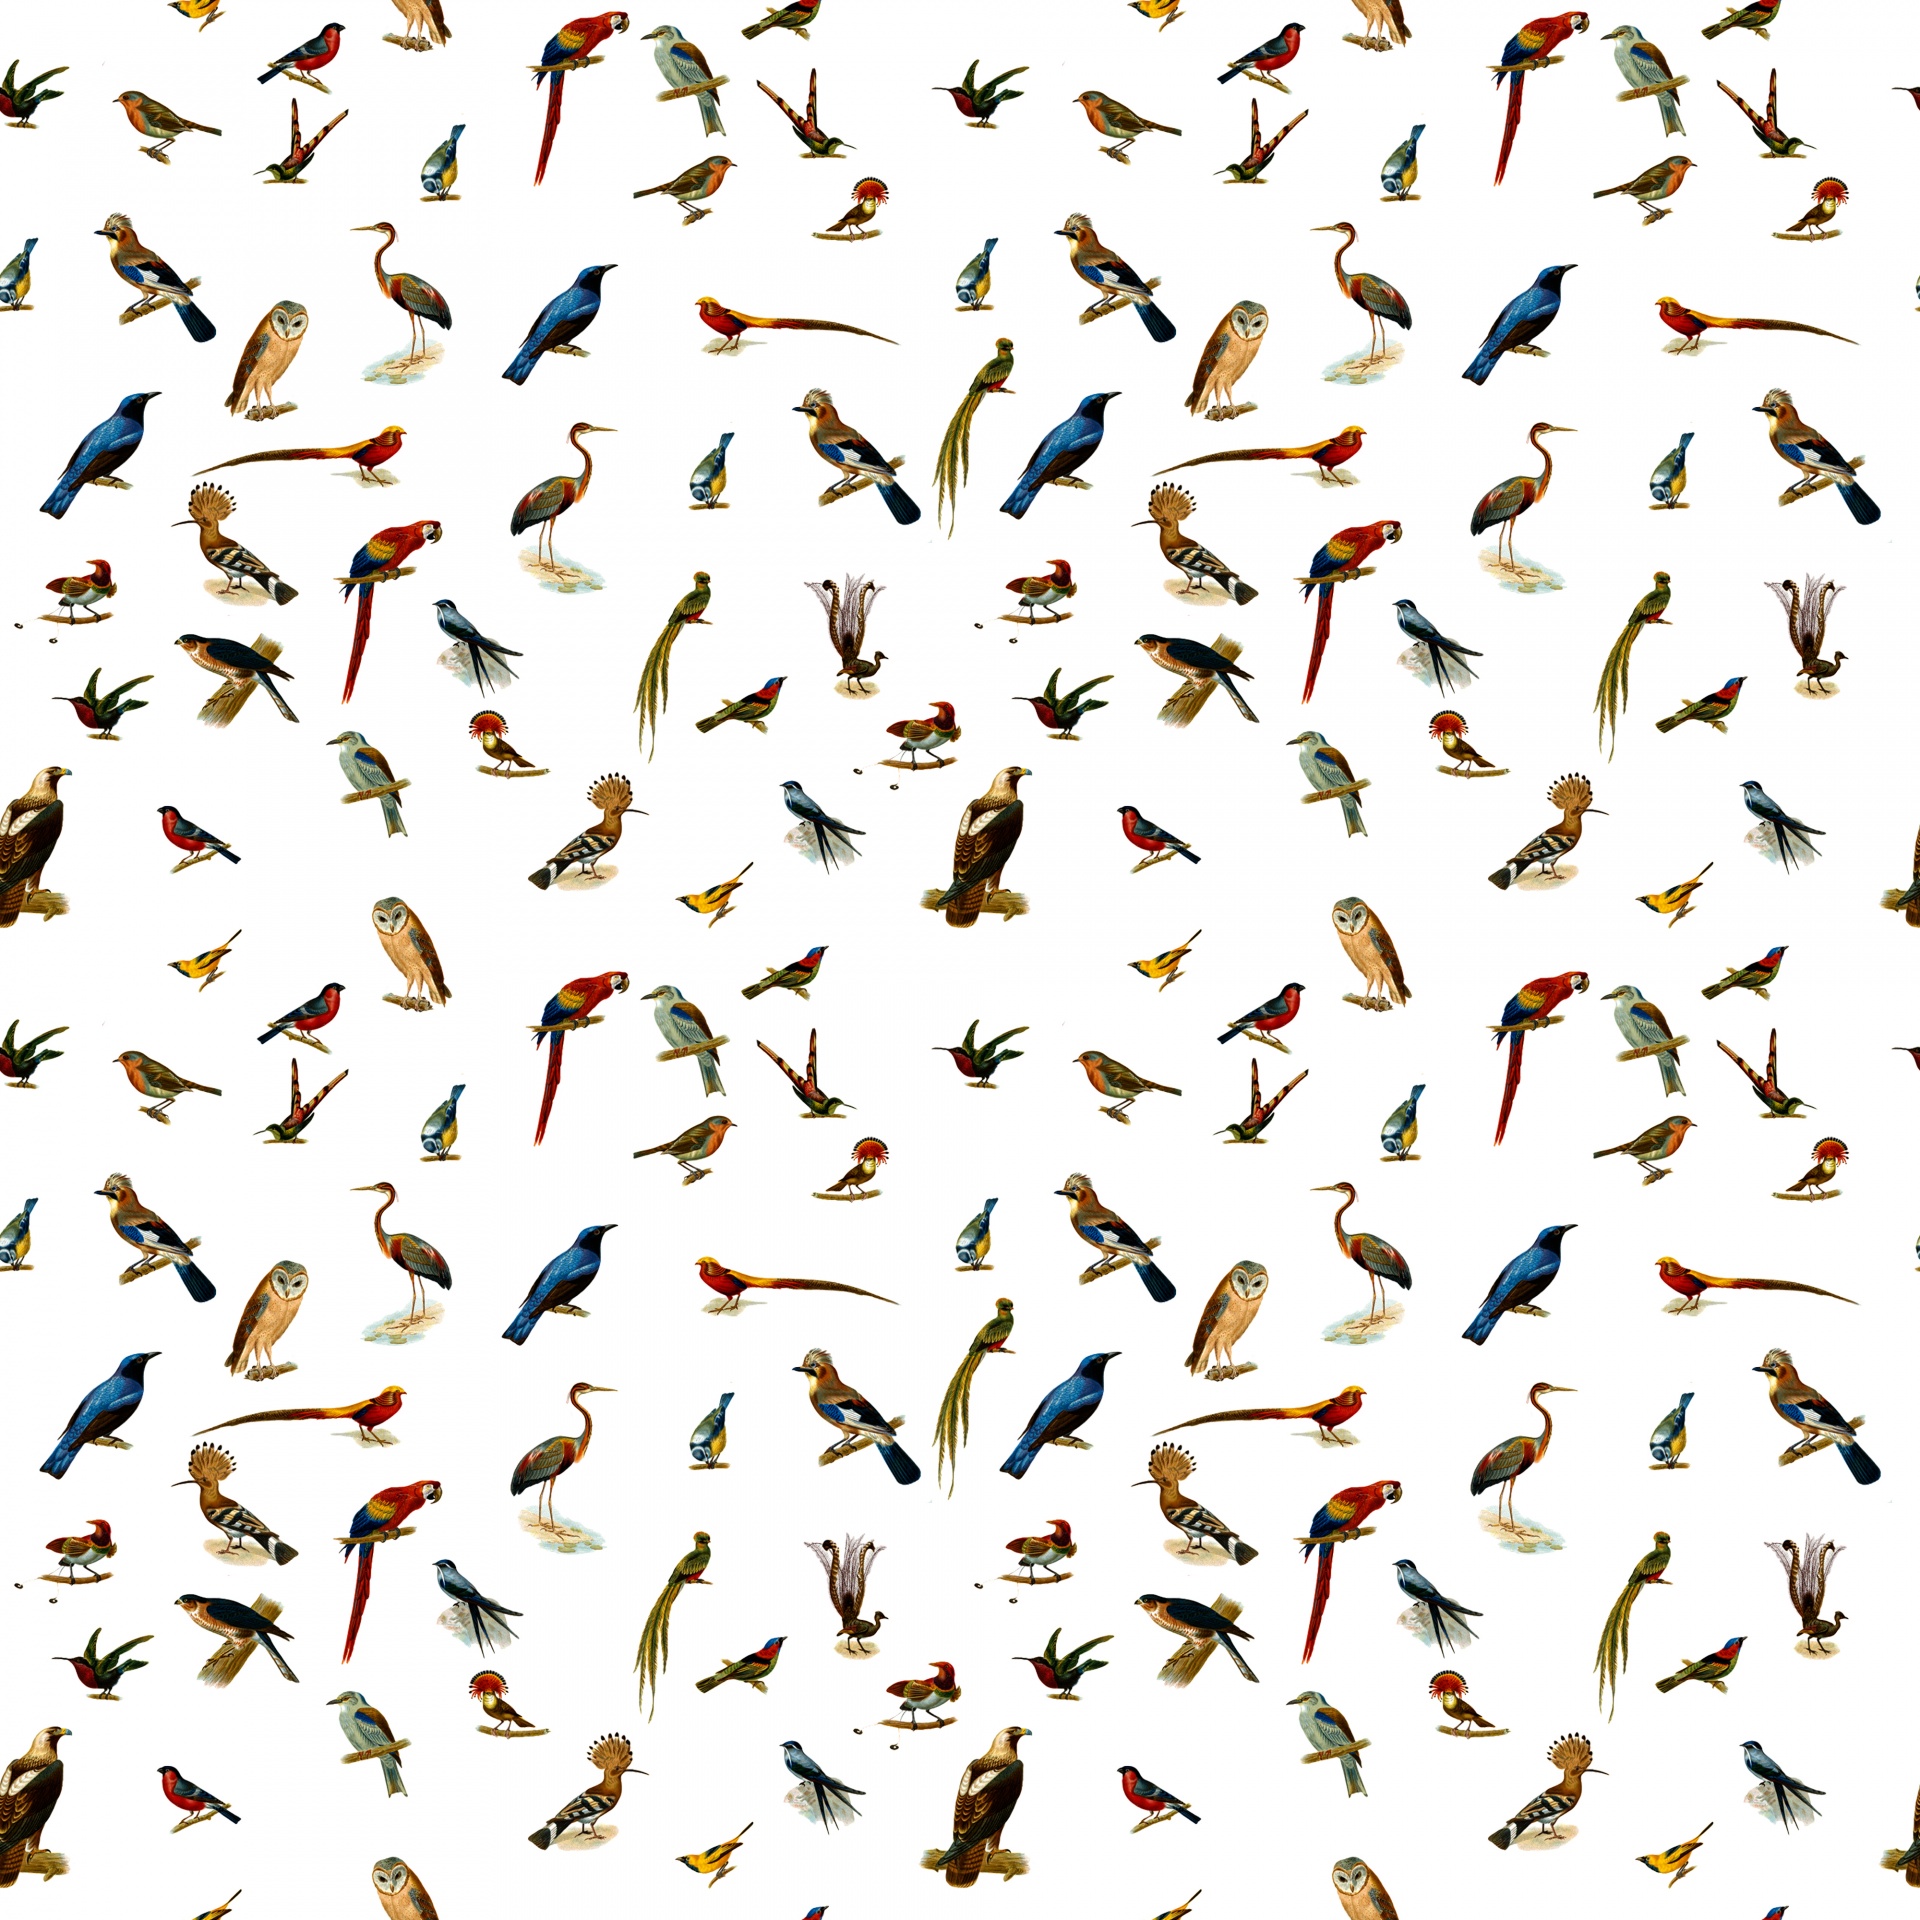 Vintage drawings of various species of birds seamless background wallpaper pattern